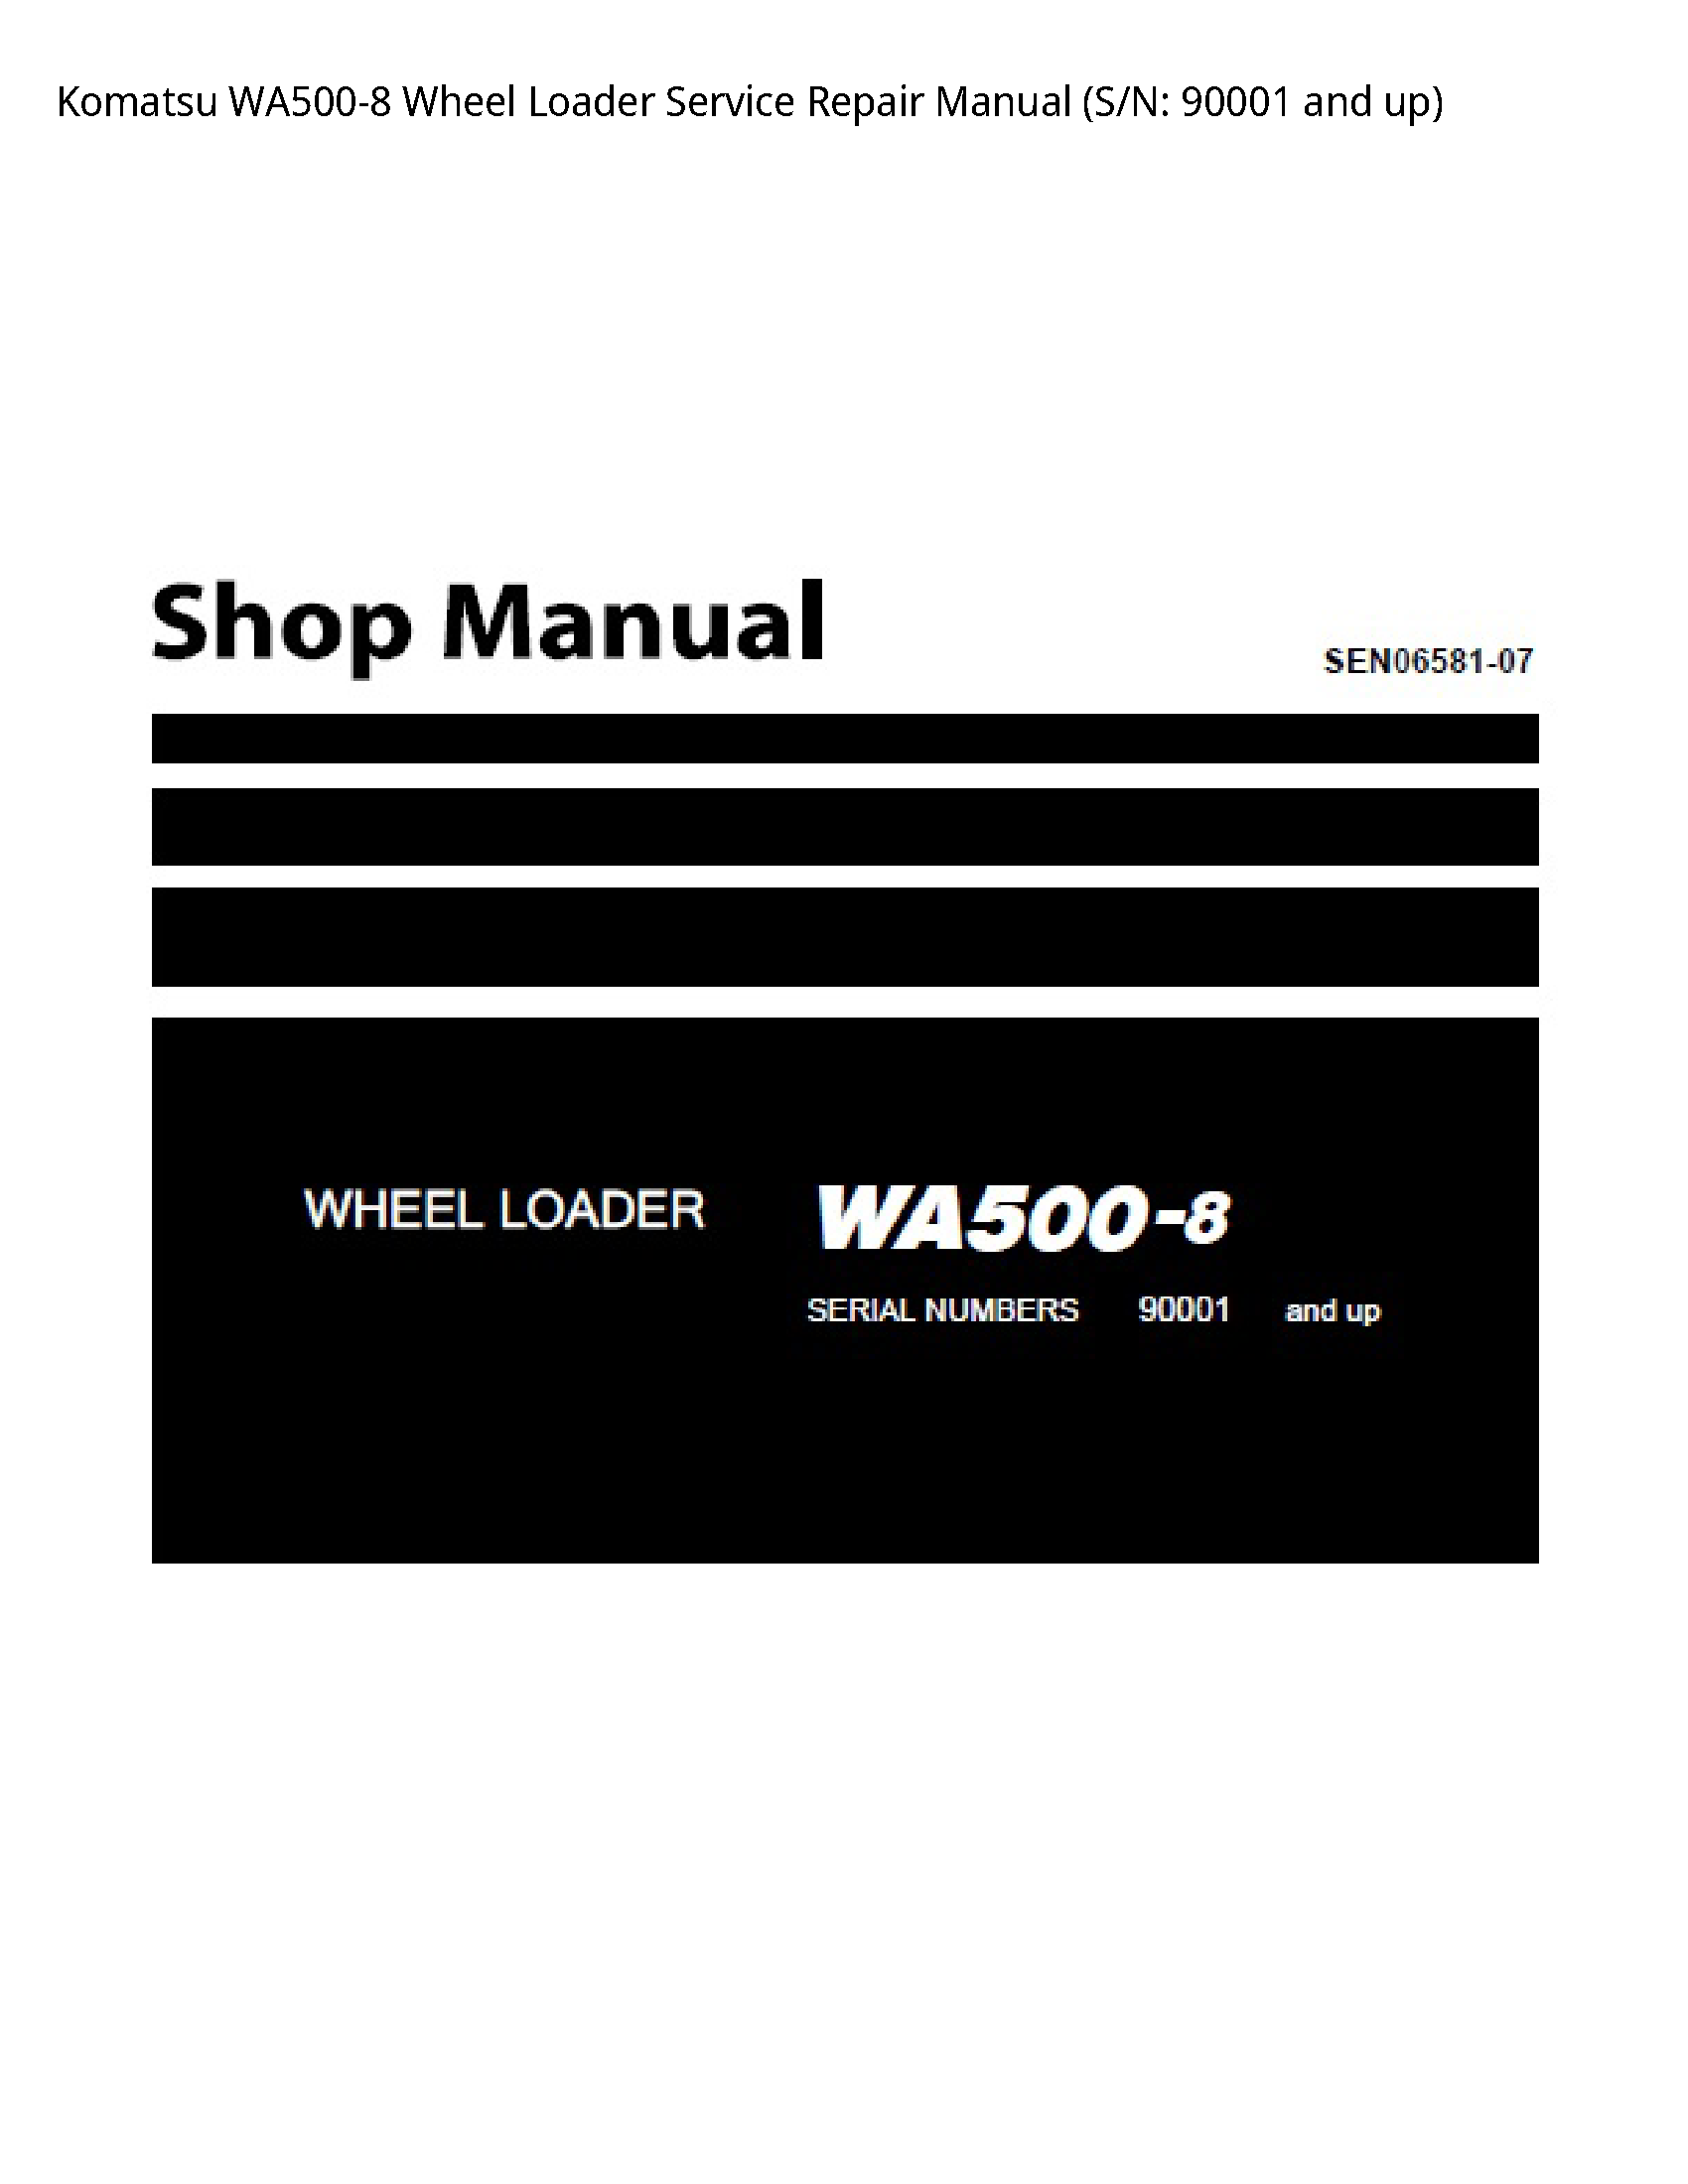 KOMATSU WA500-8 Wheel Loader manual